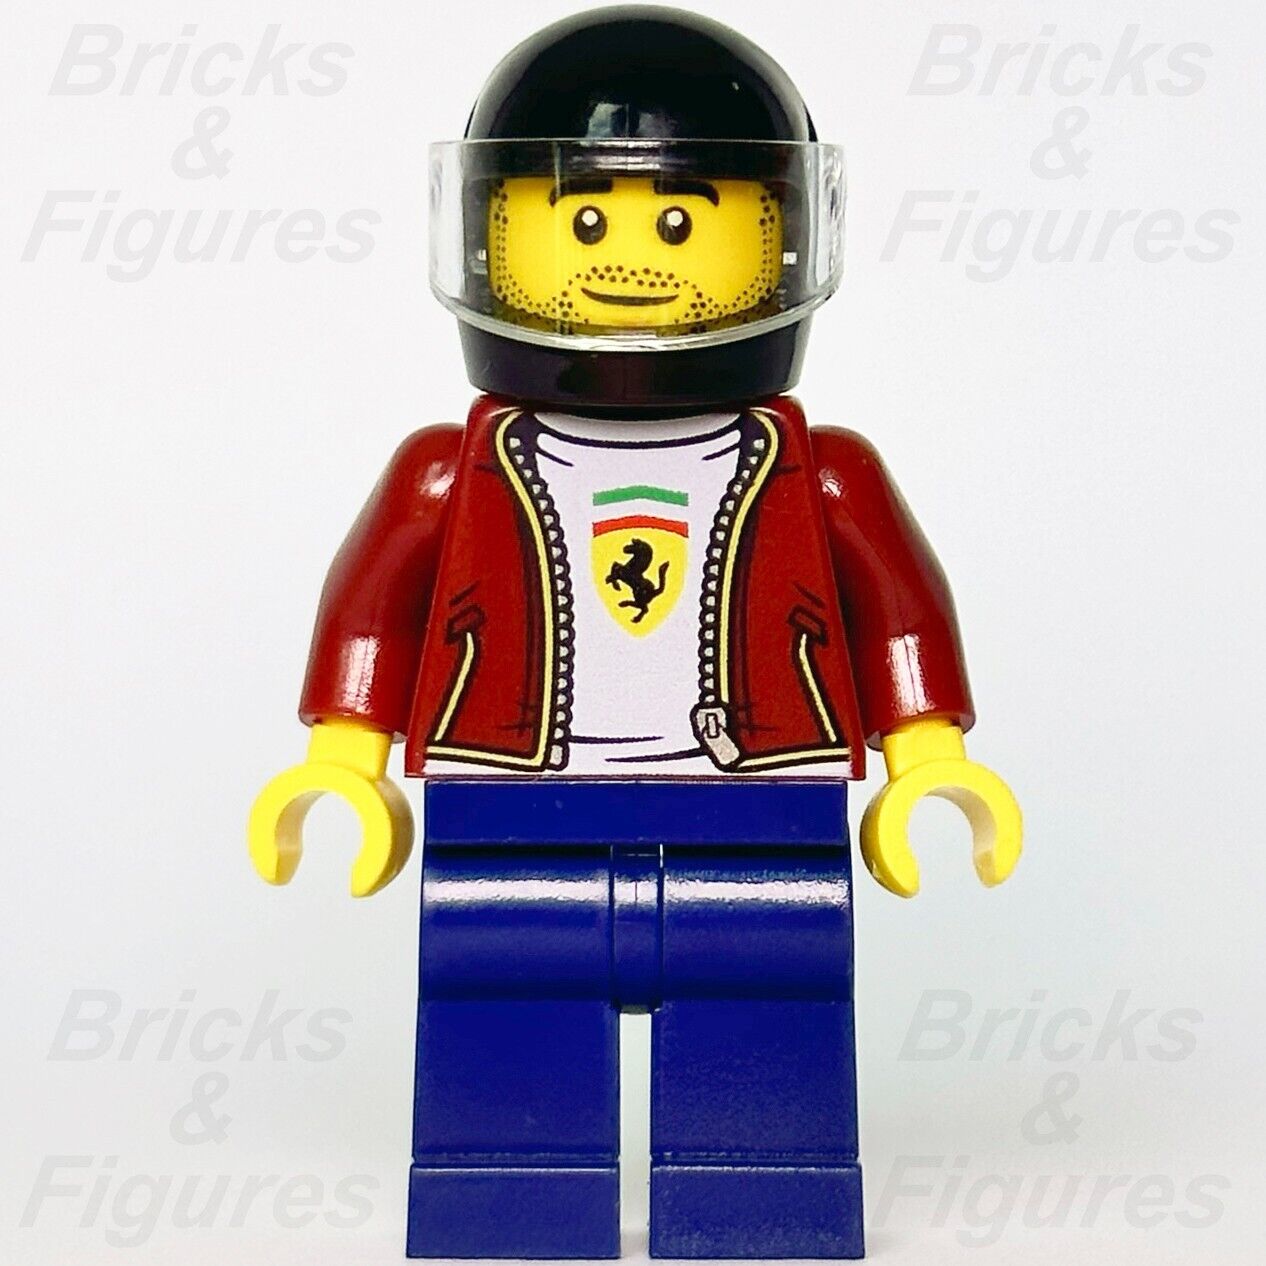 LEGO Speed Champions Ferrari F8 Tributo Driver Minifigure Racing 76895 sc082 2